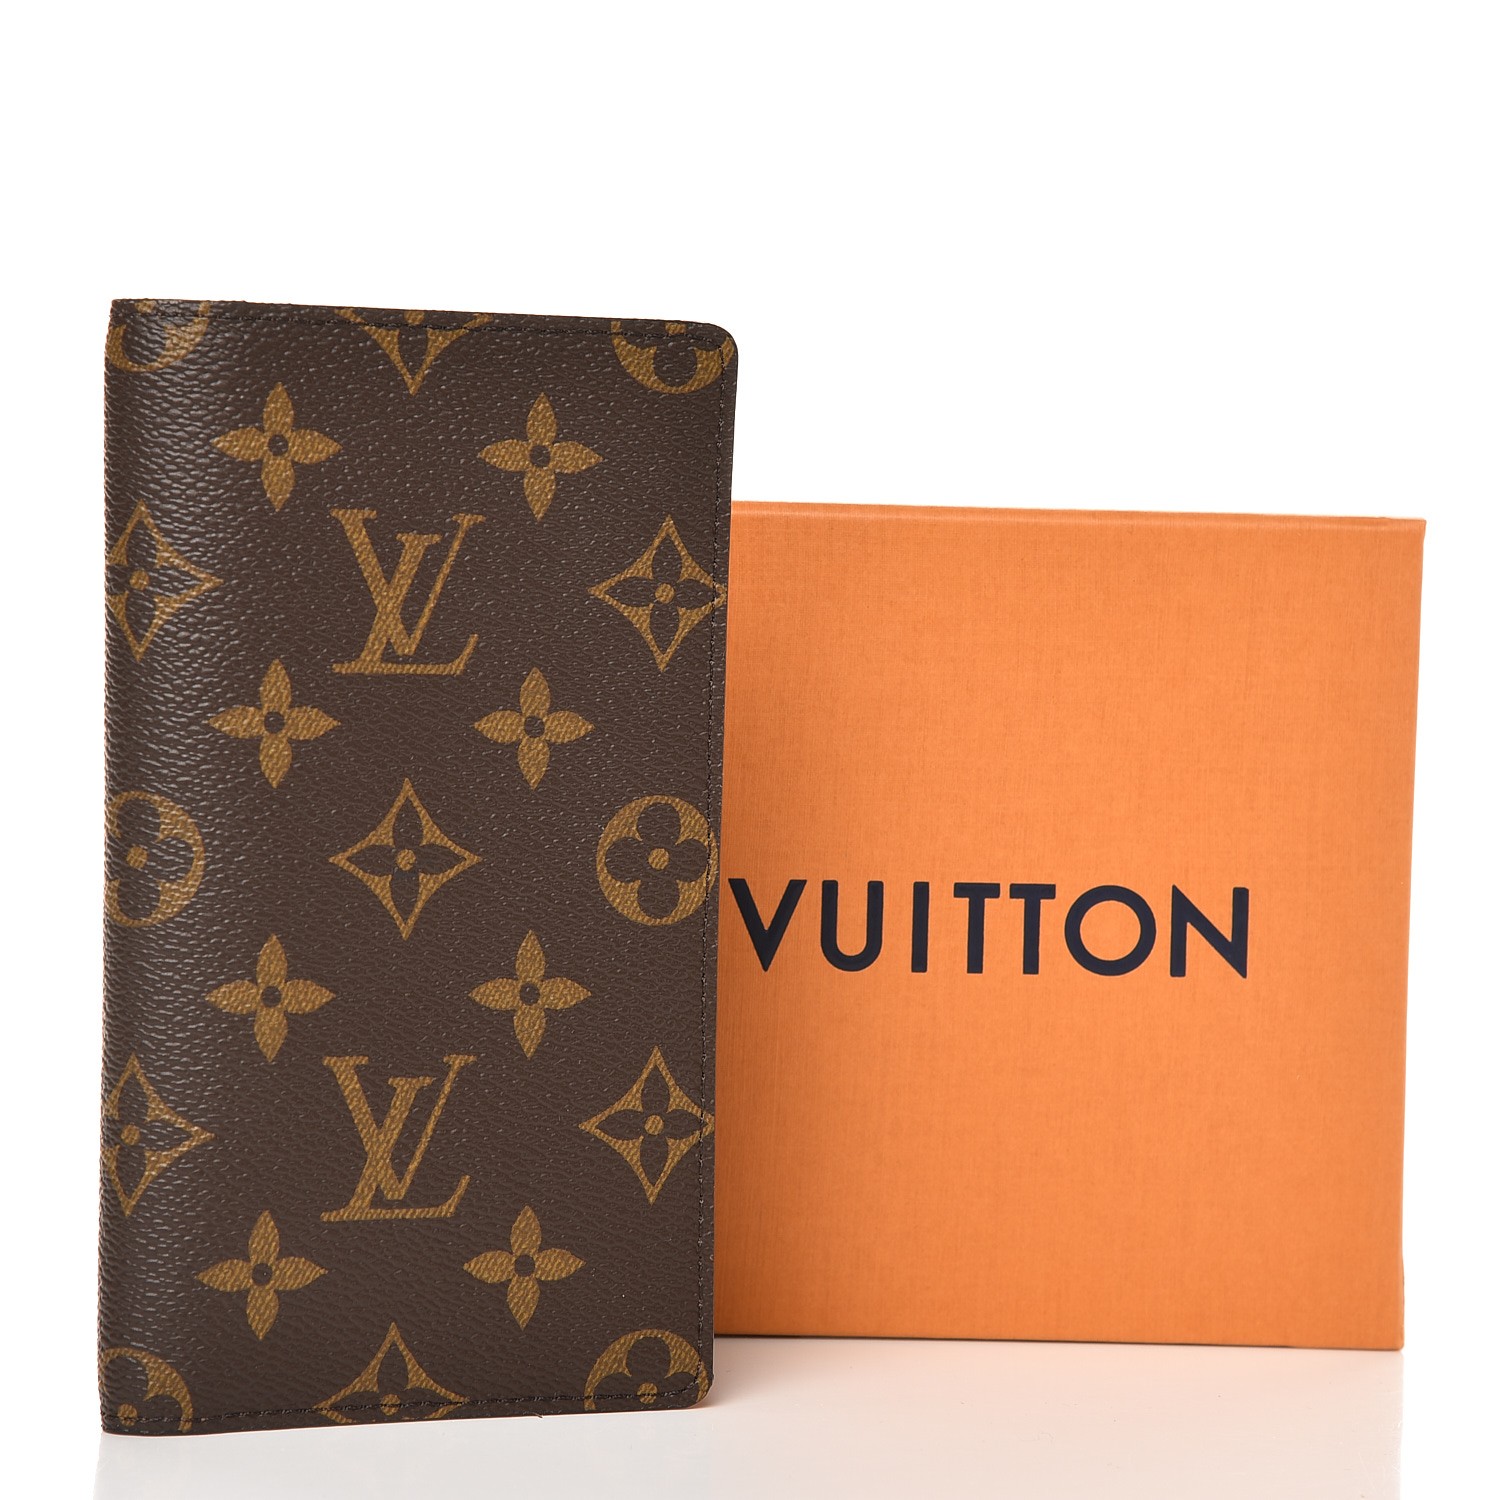 New Louis Vuitton Monogram Desk Agenda Cover/Receipt